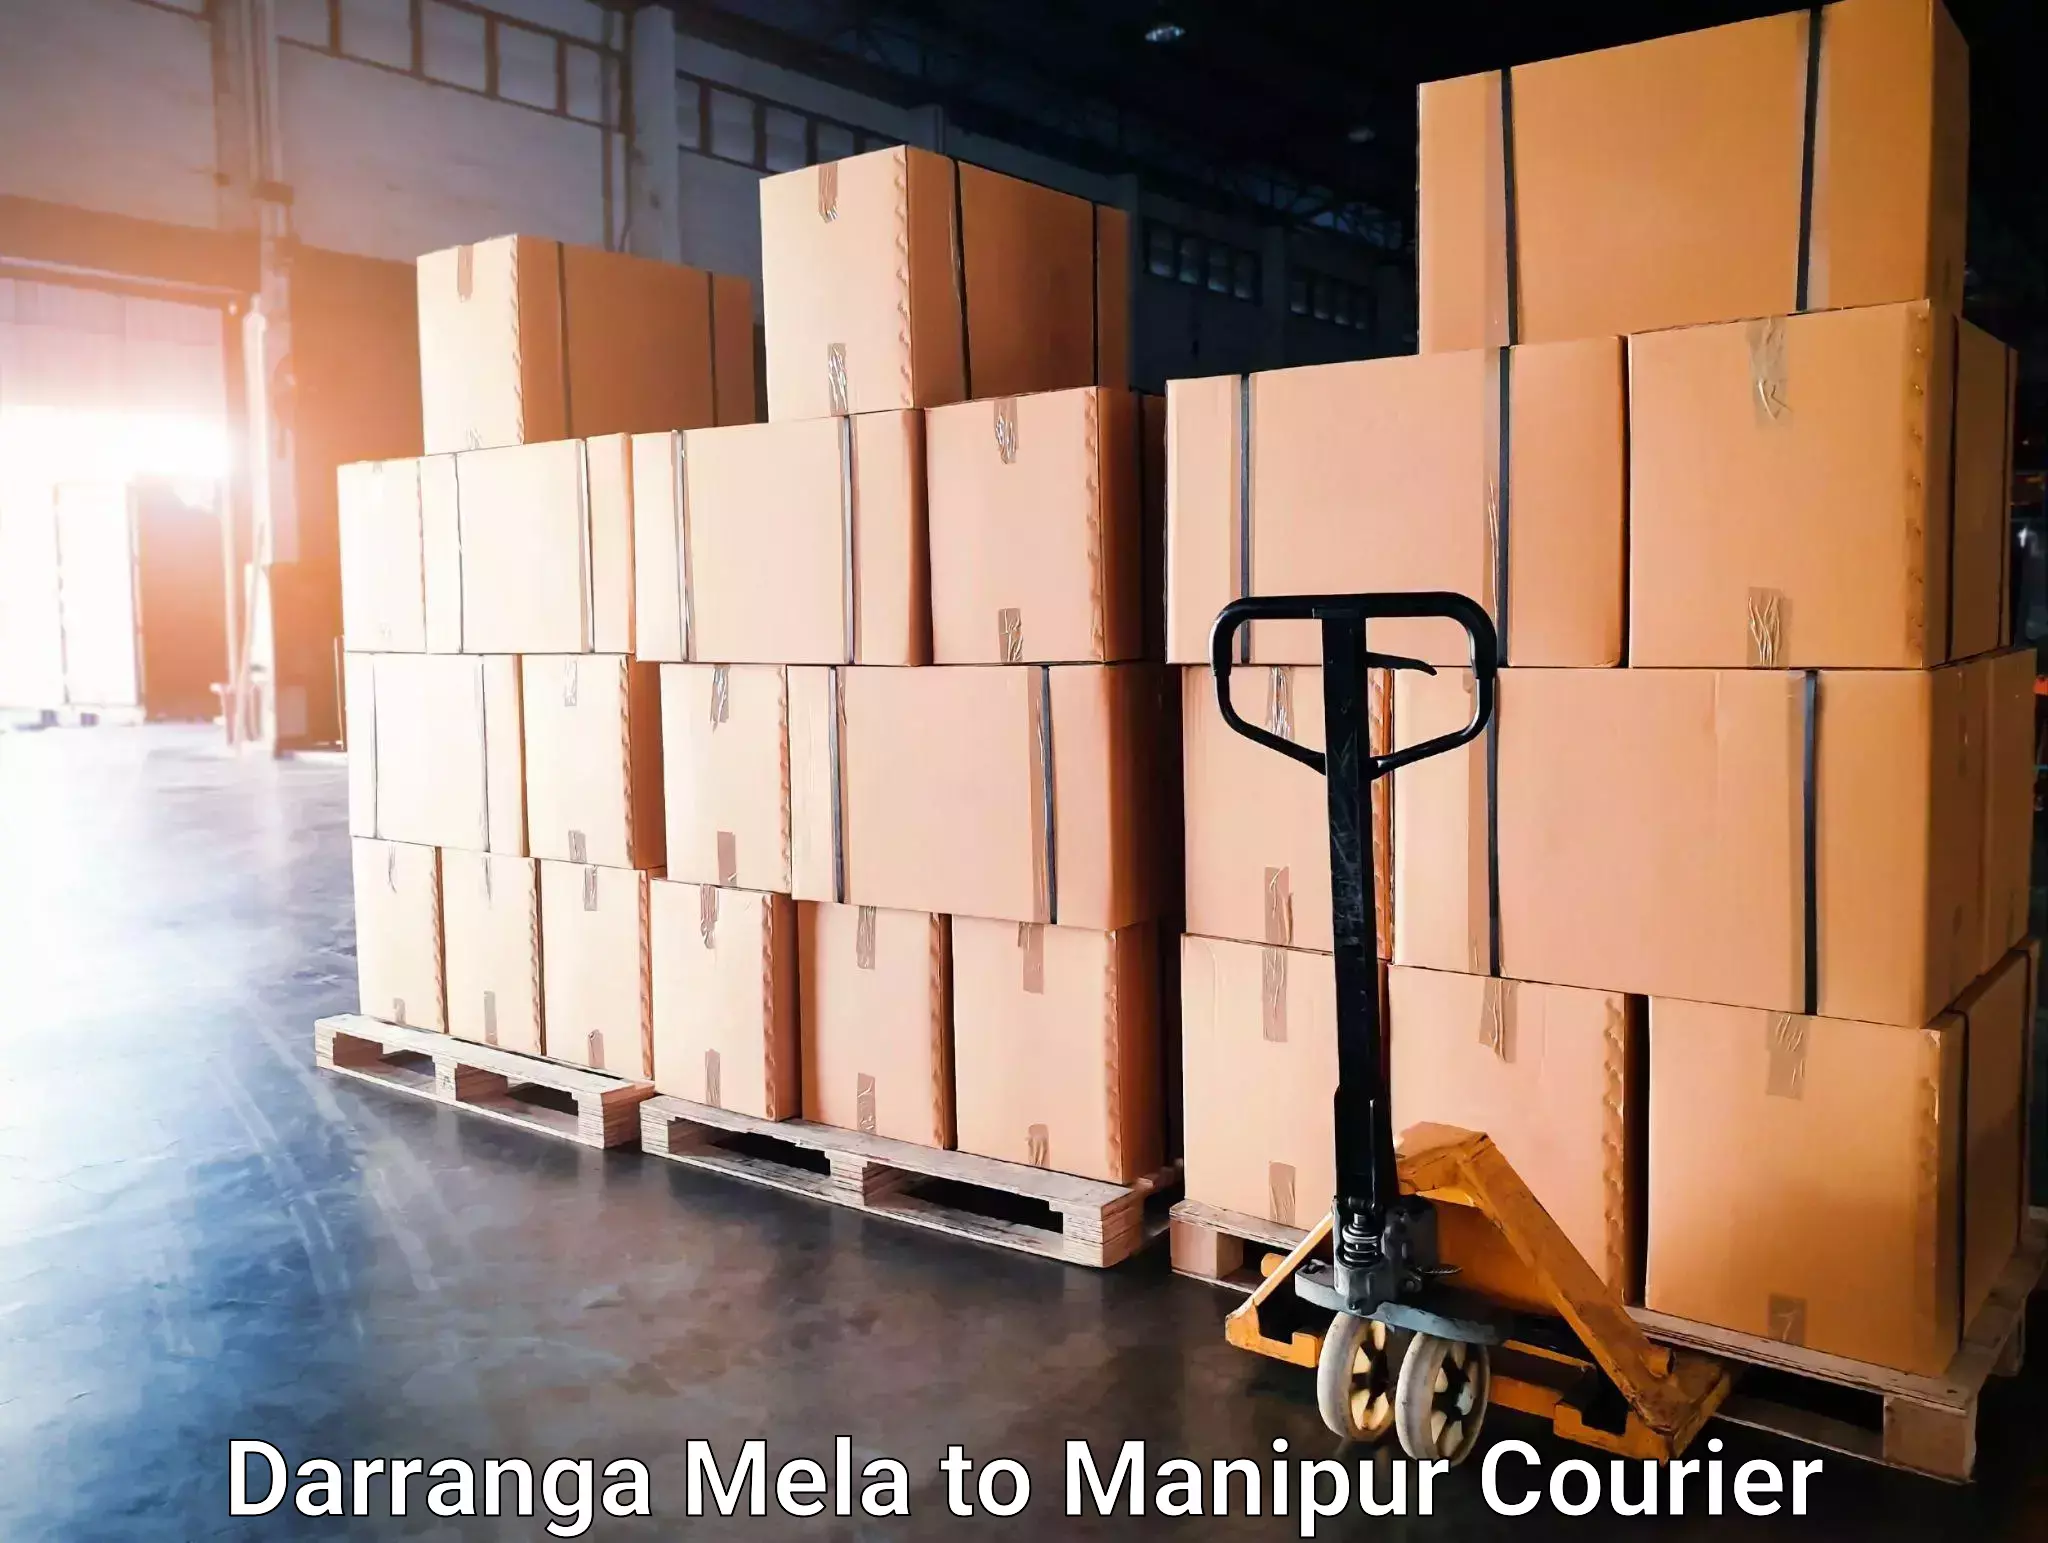 Flexible delivery scheduling Darranga Mela to Chandel